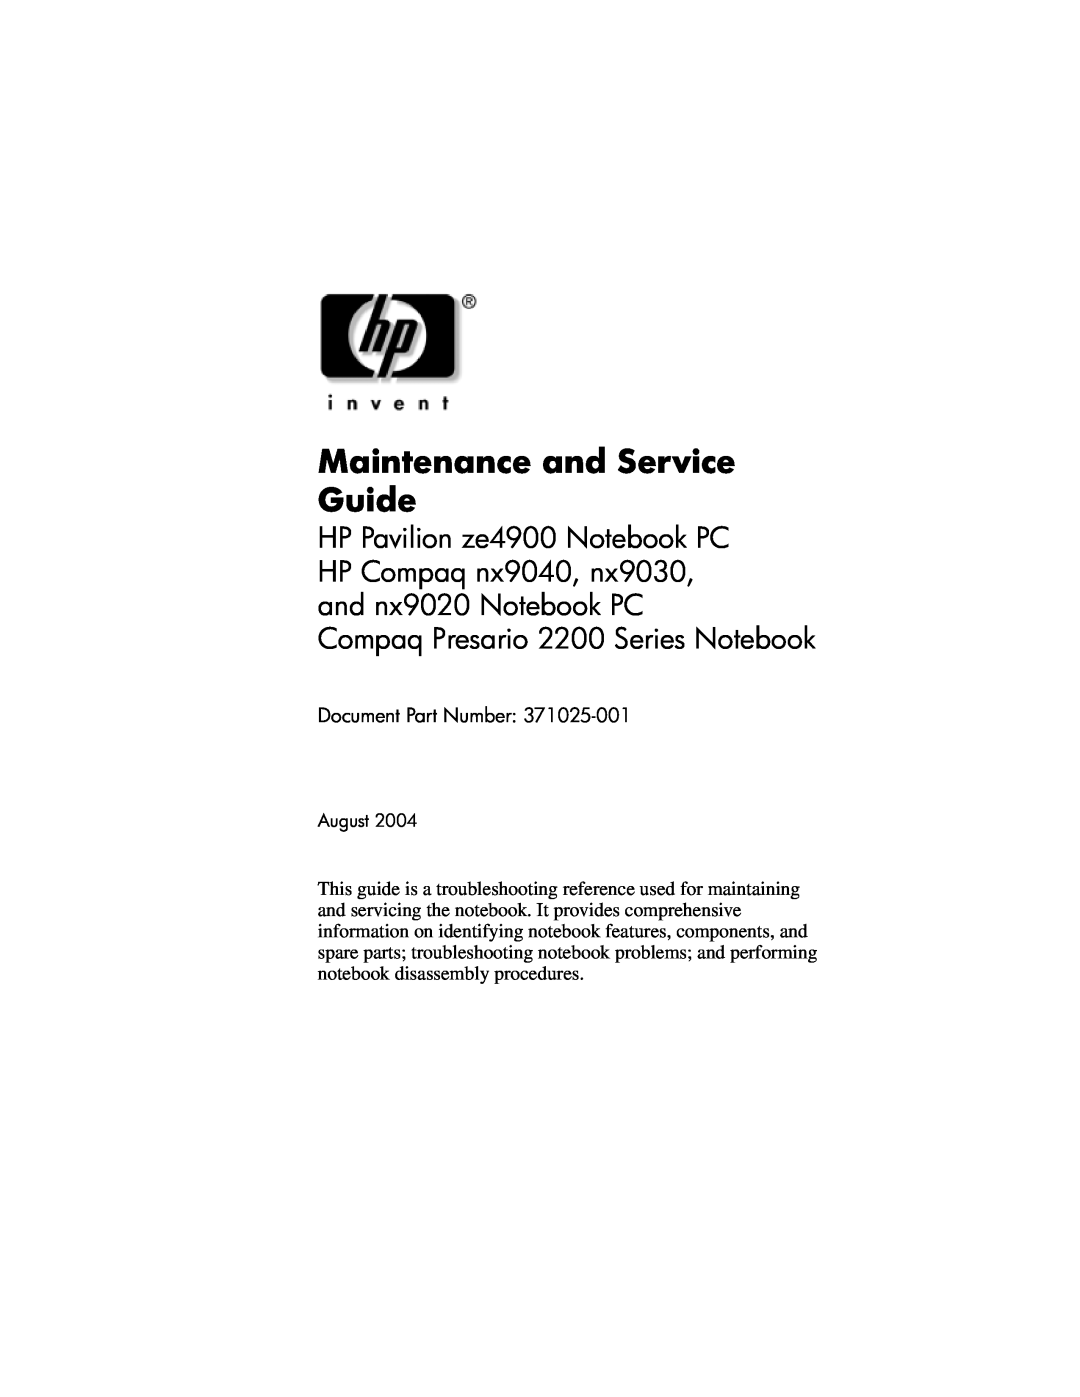 HP NX9030, NX9040, NX9020 manual Maintenance and Service Guide, HP Pavilion ze4900 Notebook PC HP Compaq nx9040, nx9030 